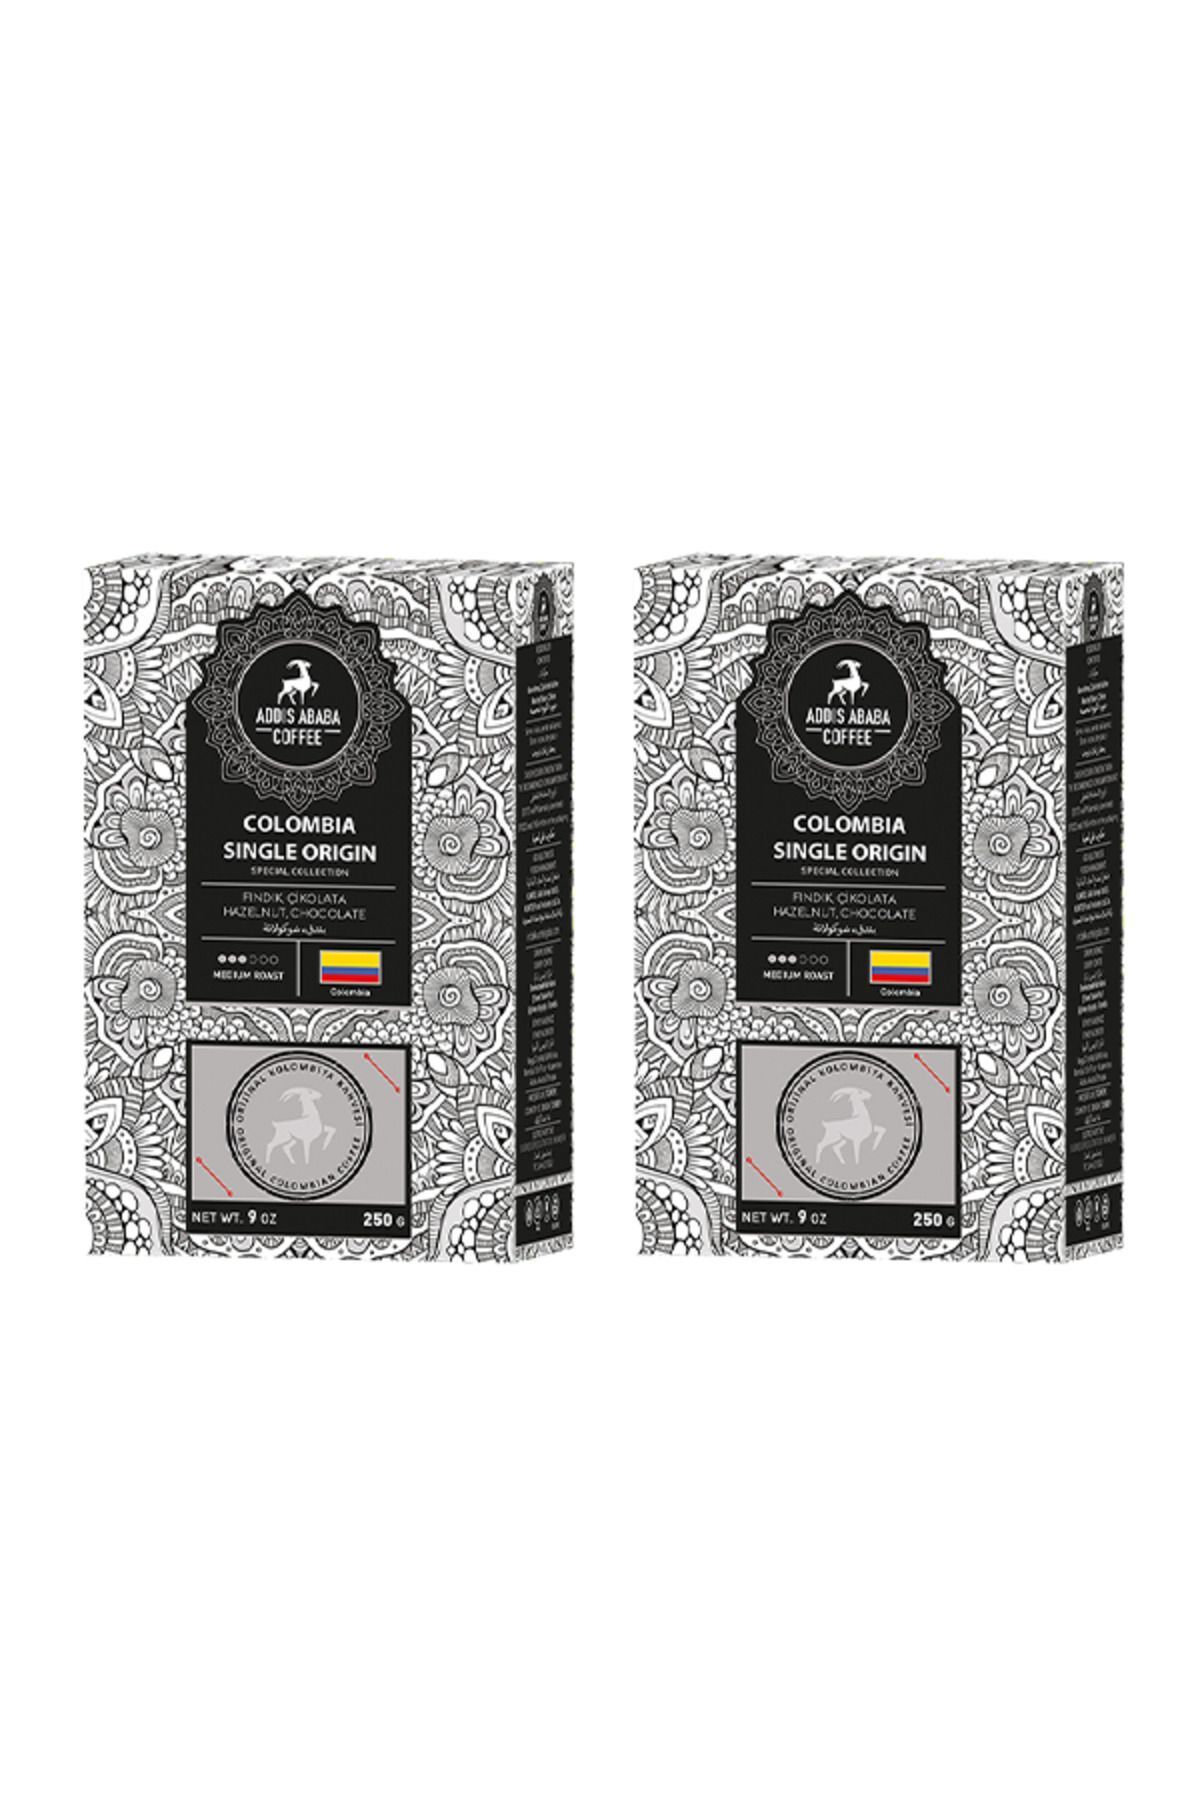 Addis Ababa Coffee Colombia Single Origin Coffee 2 Li Avantajlı Paket 500 Gram